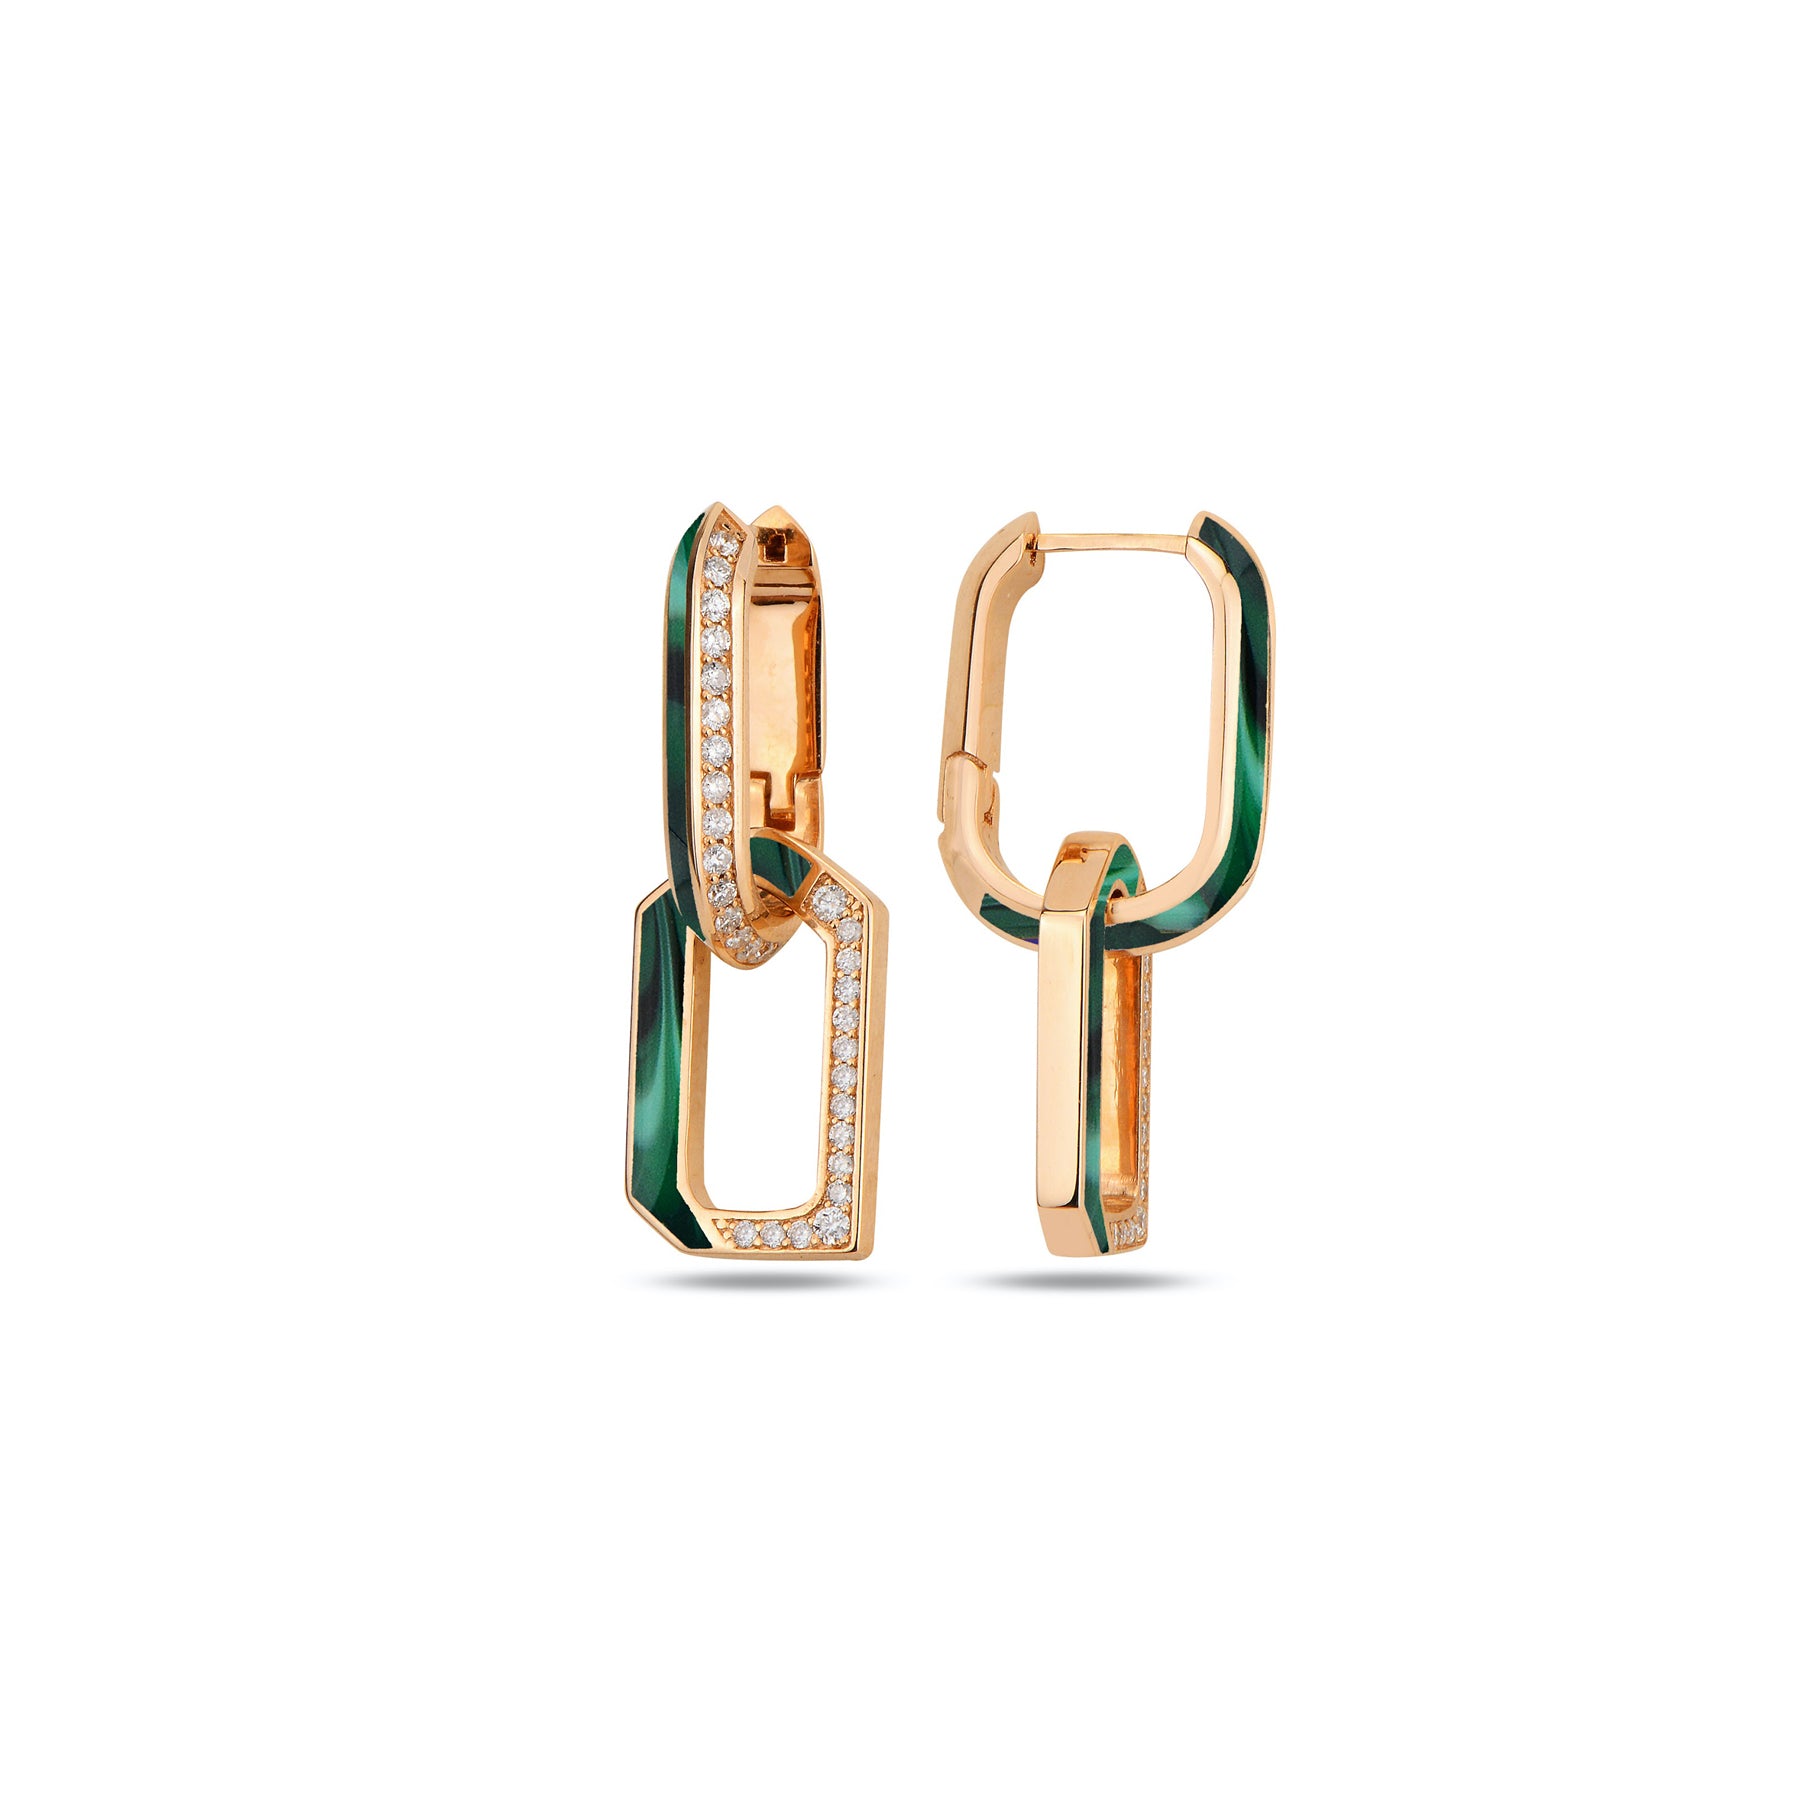 Flow Chain Earrings with Green MOP